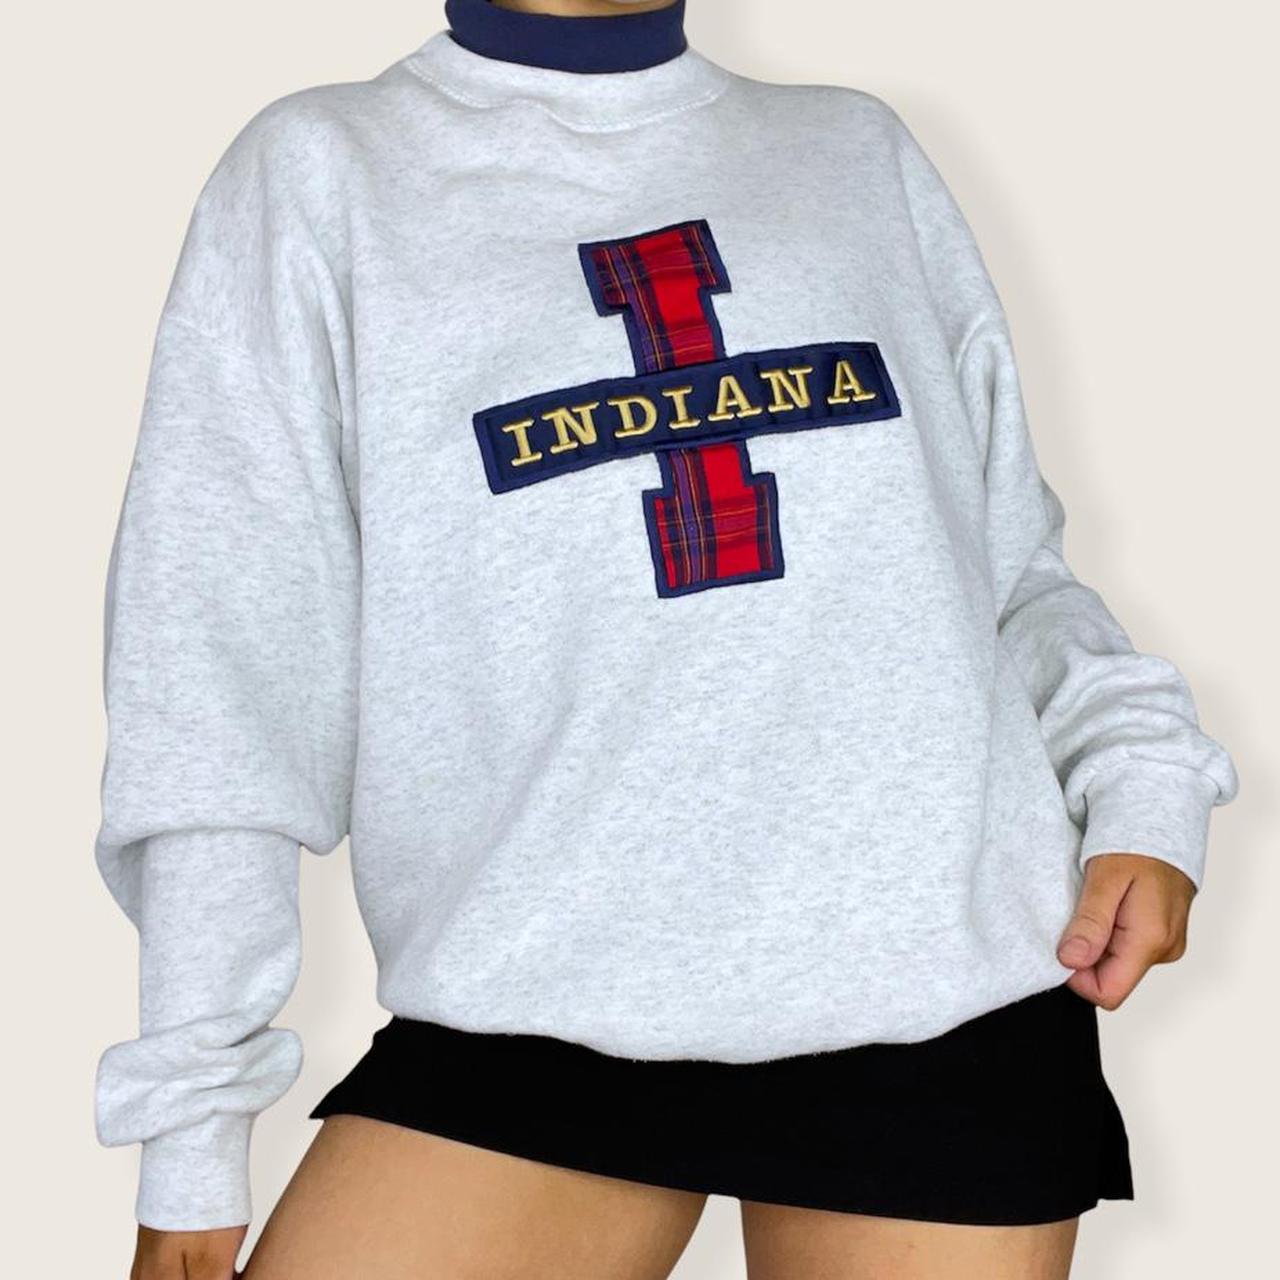 Product Image 1 - College crewneck ✨

Indiana university sweater